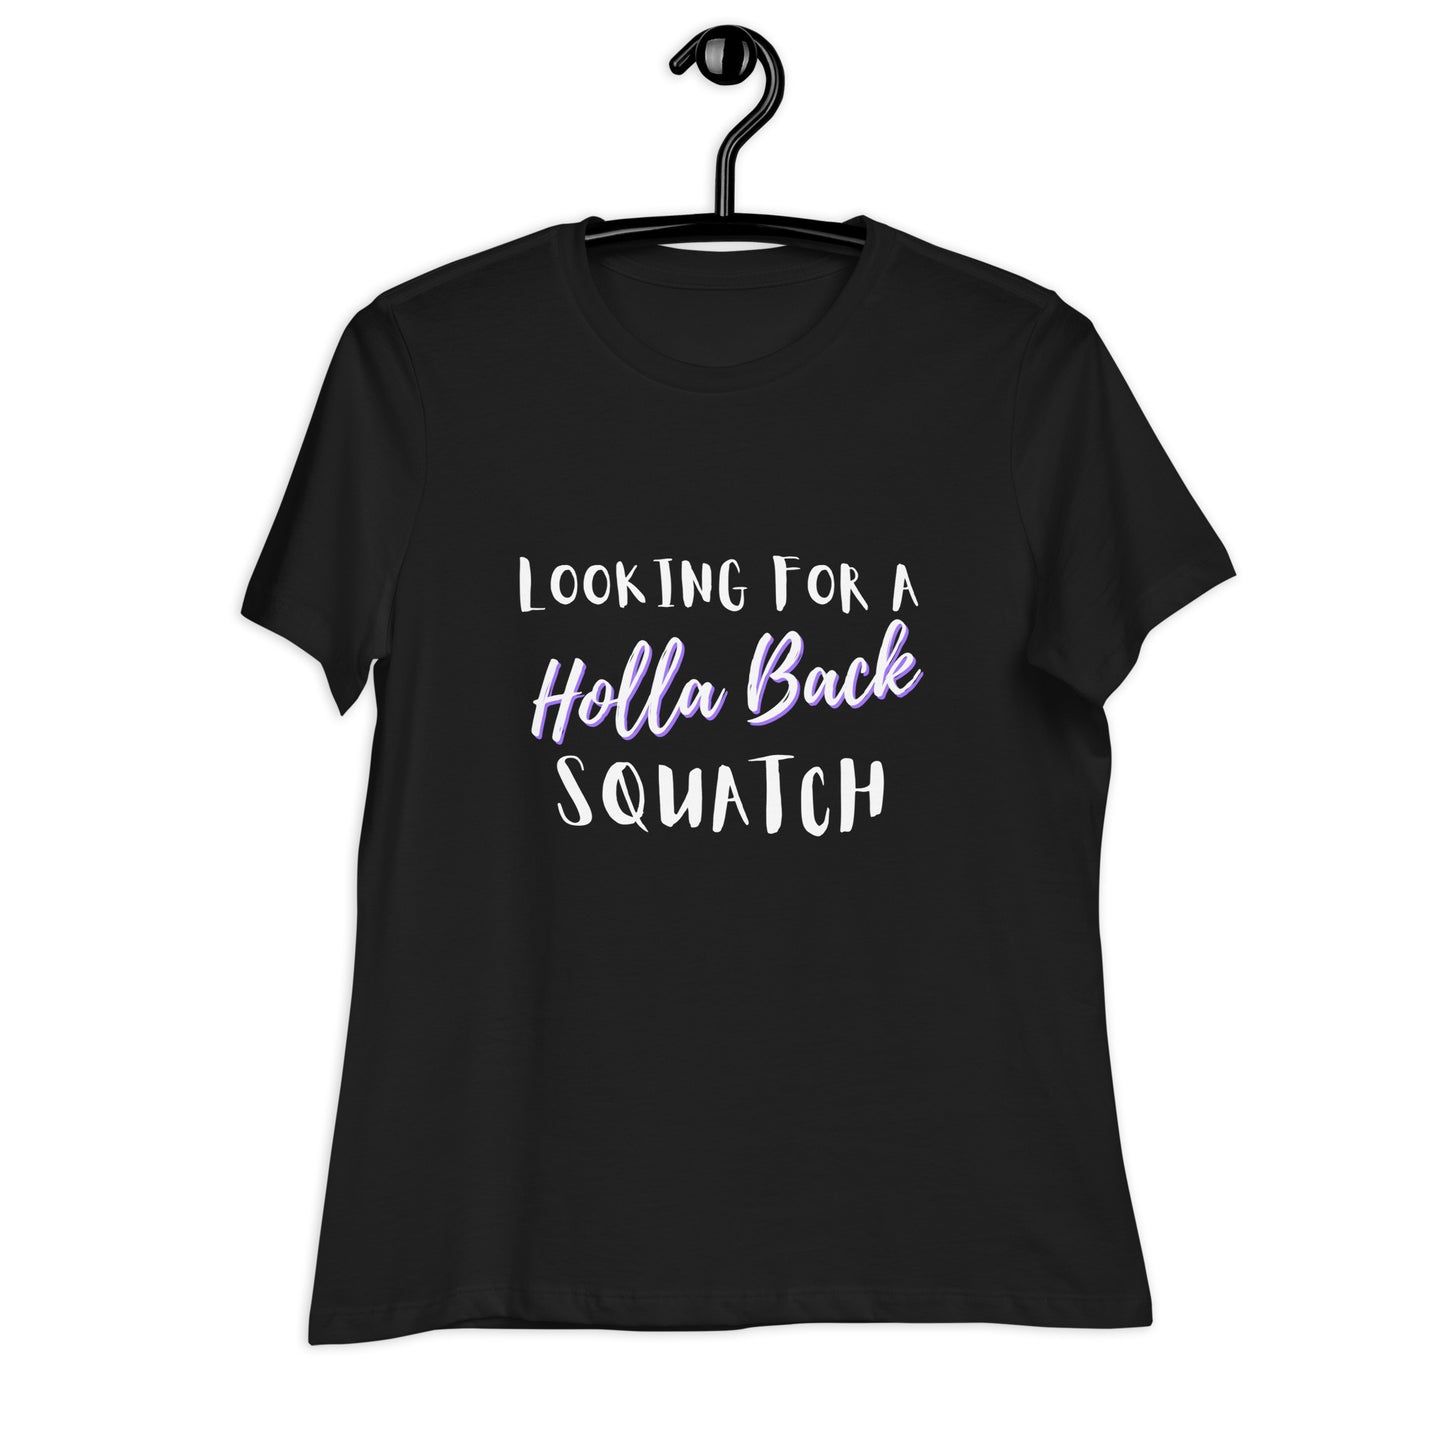 Holla Back Squatch Women's Relaxed T-Shirt